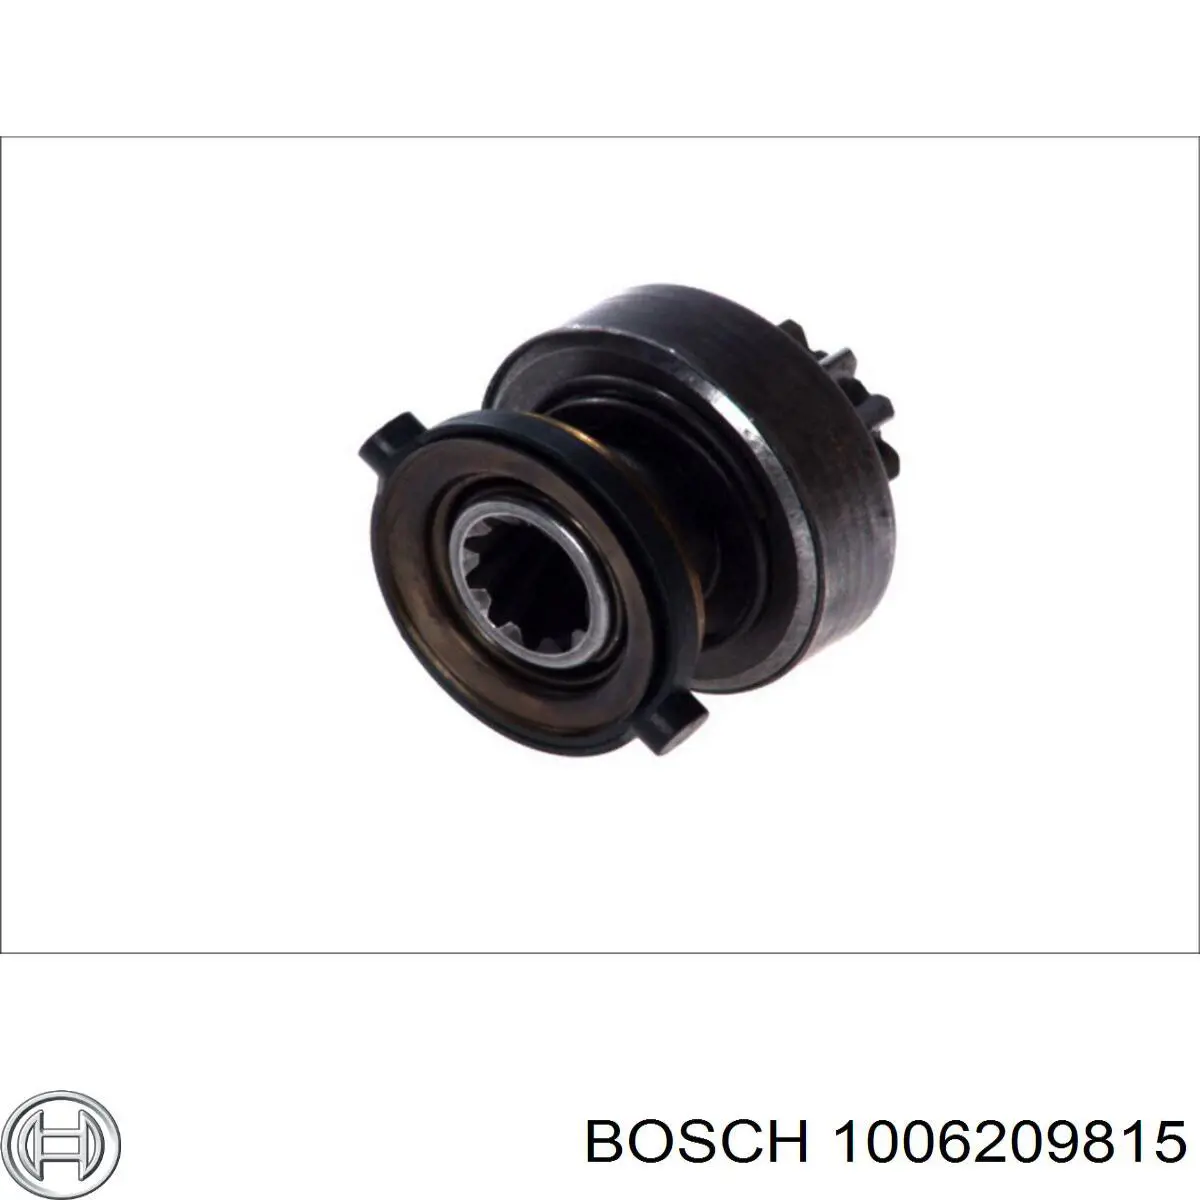 1006209815 Bosch bendix, motor de arranque